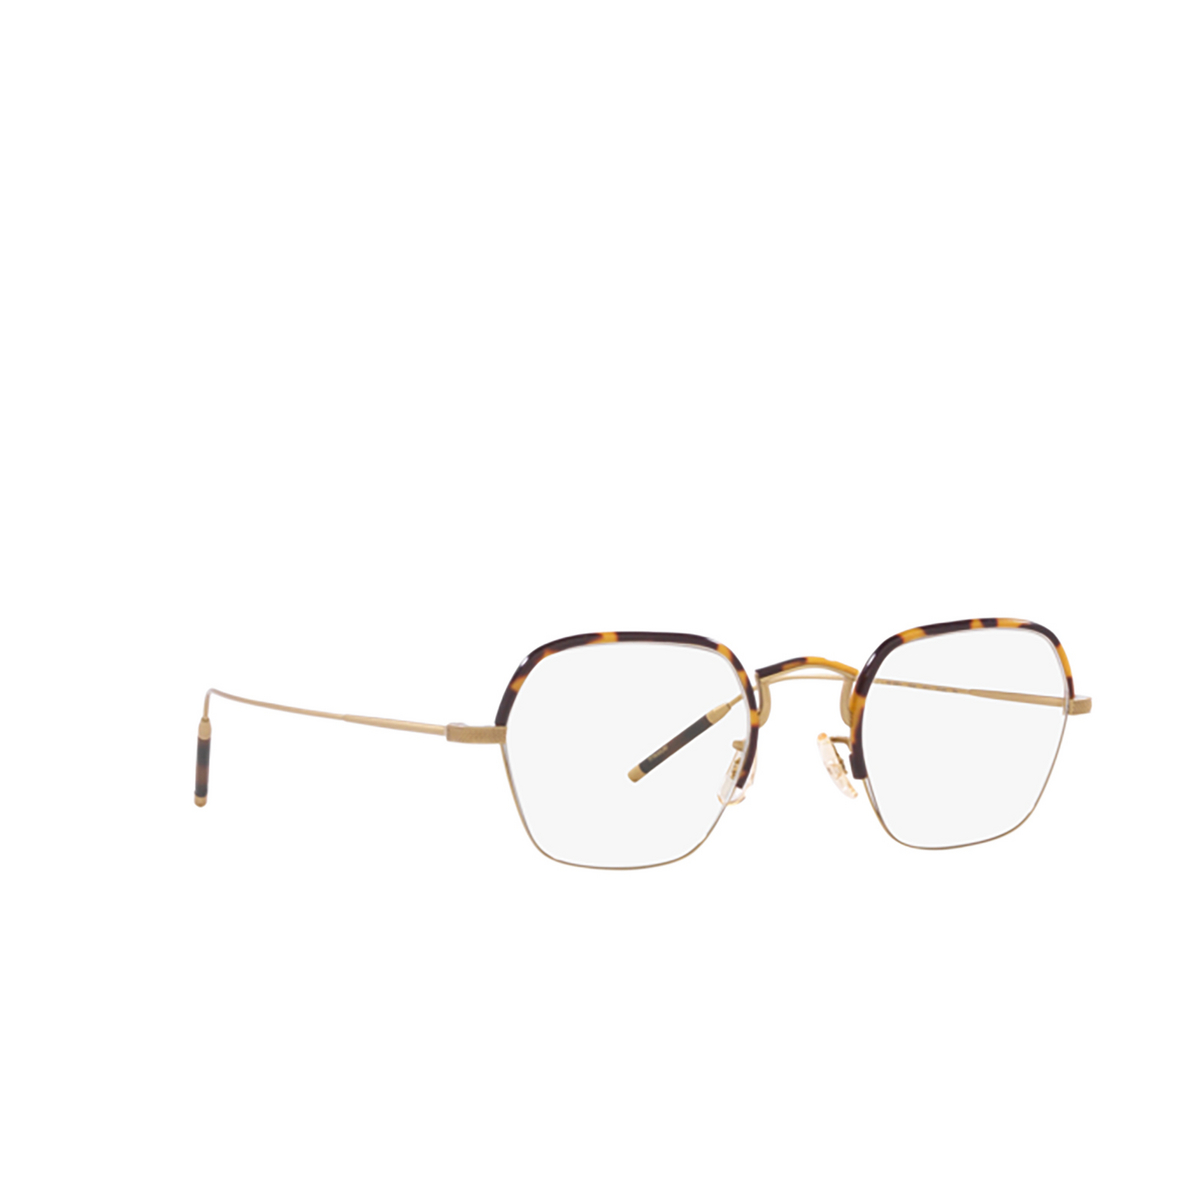 Oliver Peoples TK-7 Eyeglasses 5252 Brushed Gold / Tortoise - three-quarters view